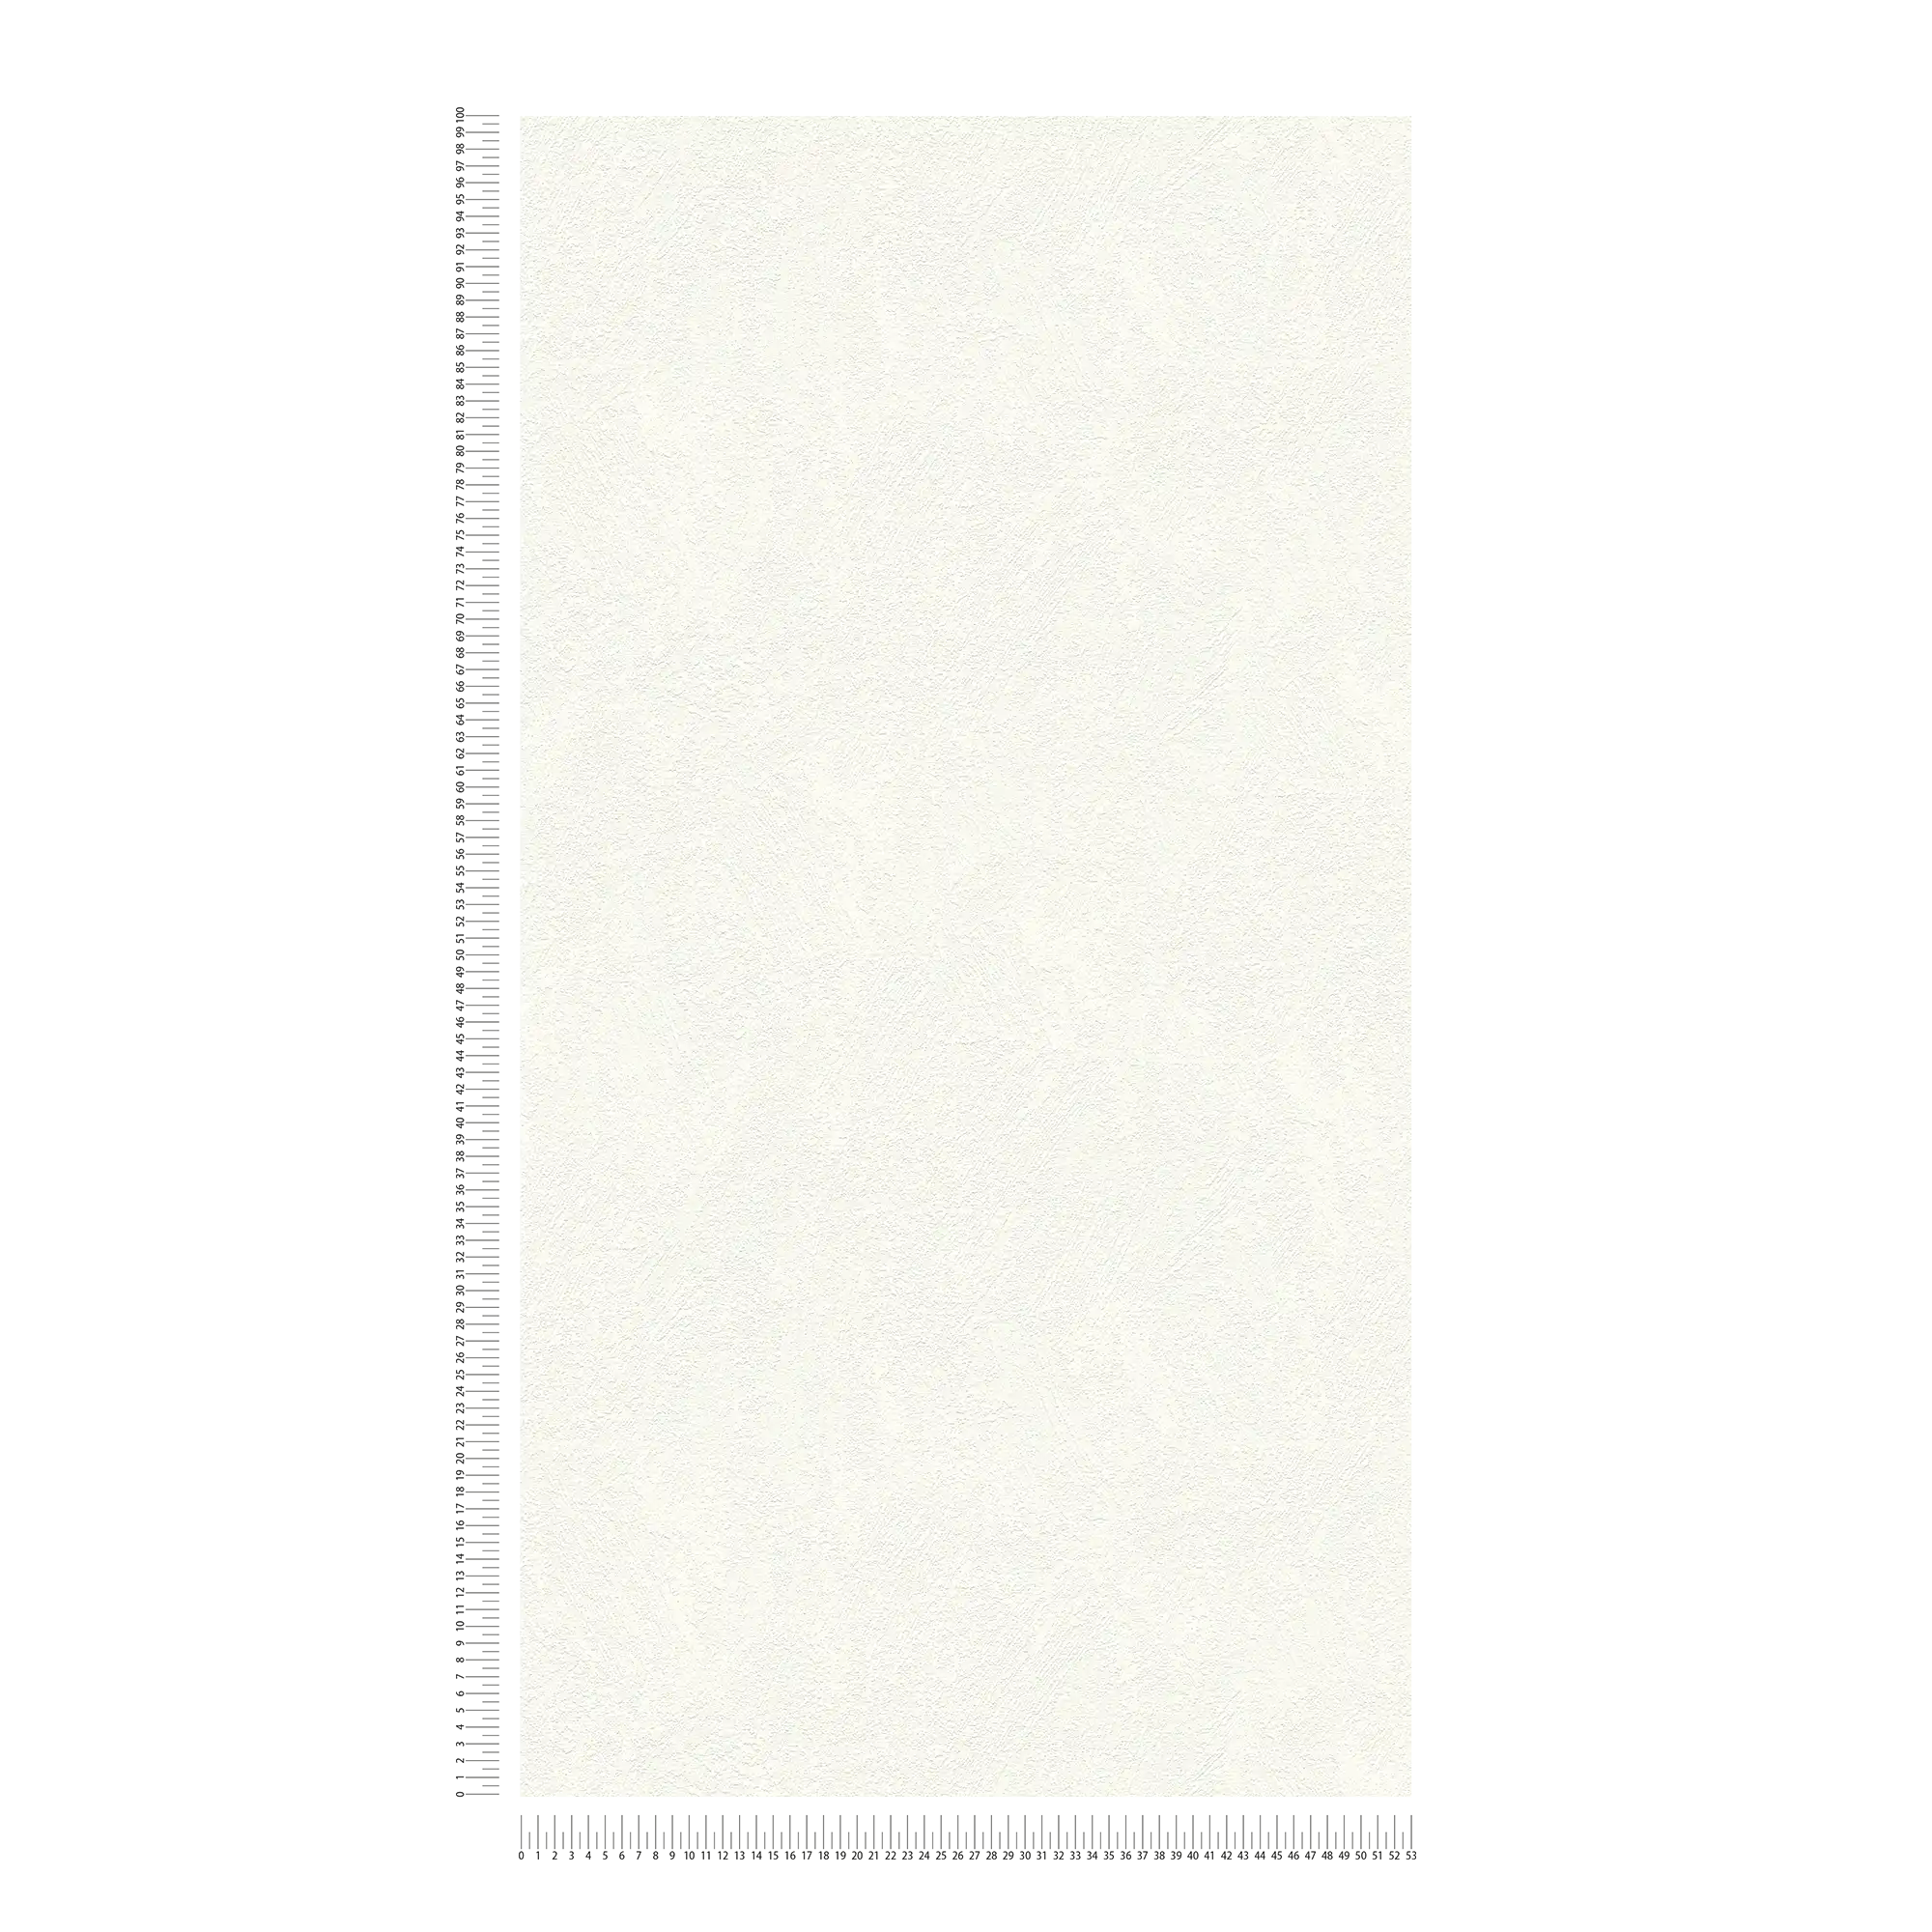             Putzoptik Tapete aus Vlies mit Schaumstruktur-Muster – Weiß
        